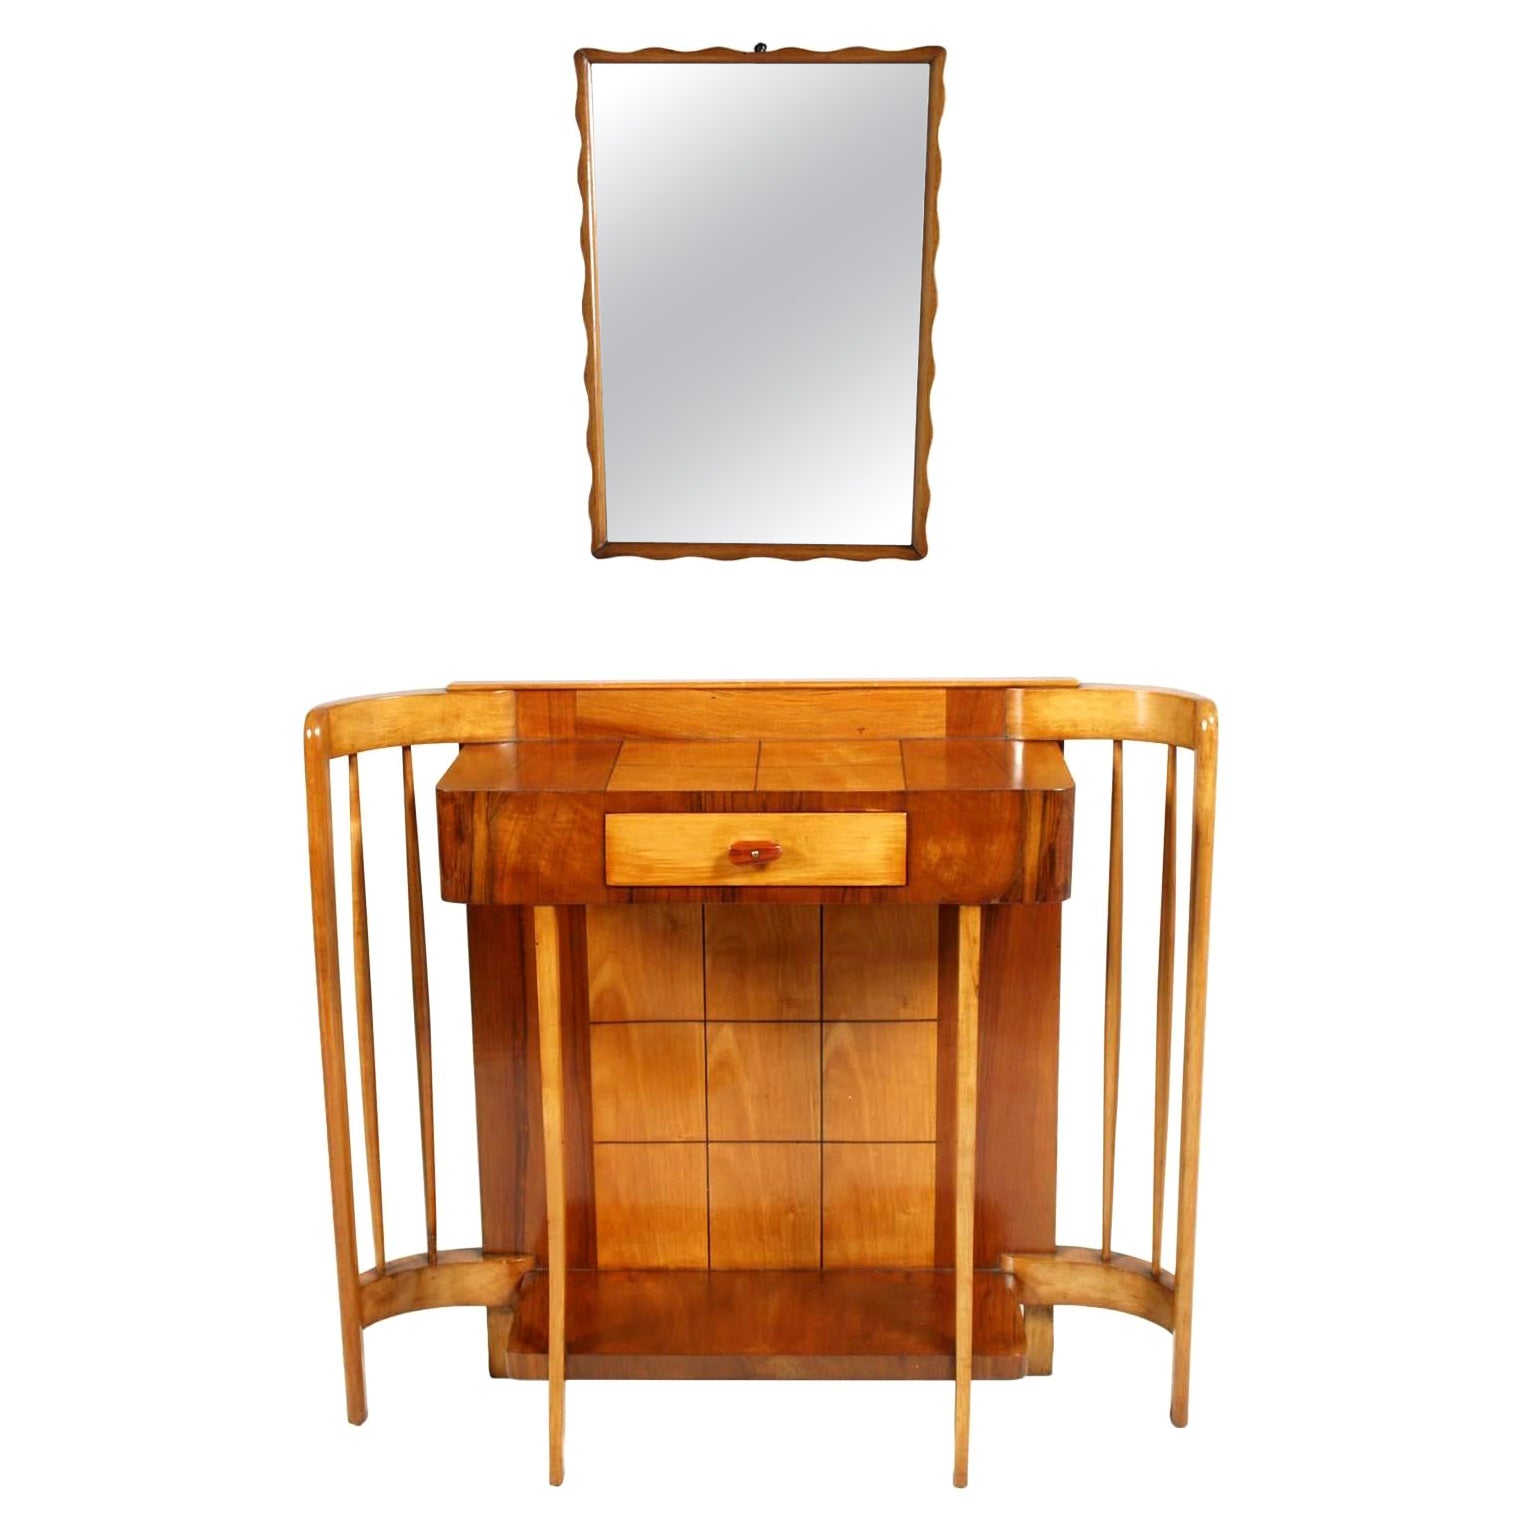 Mid Century Art Deco Console Mirror, Paolo Buffa Style, Wax Polished